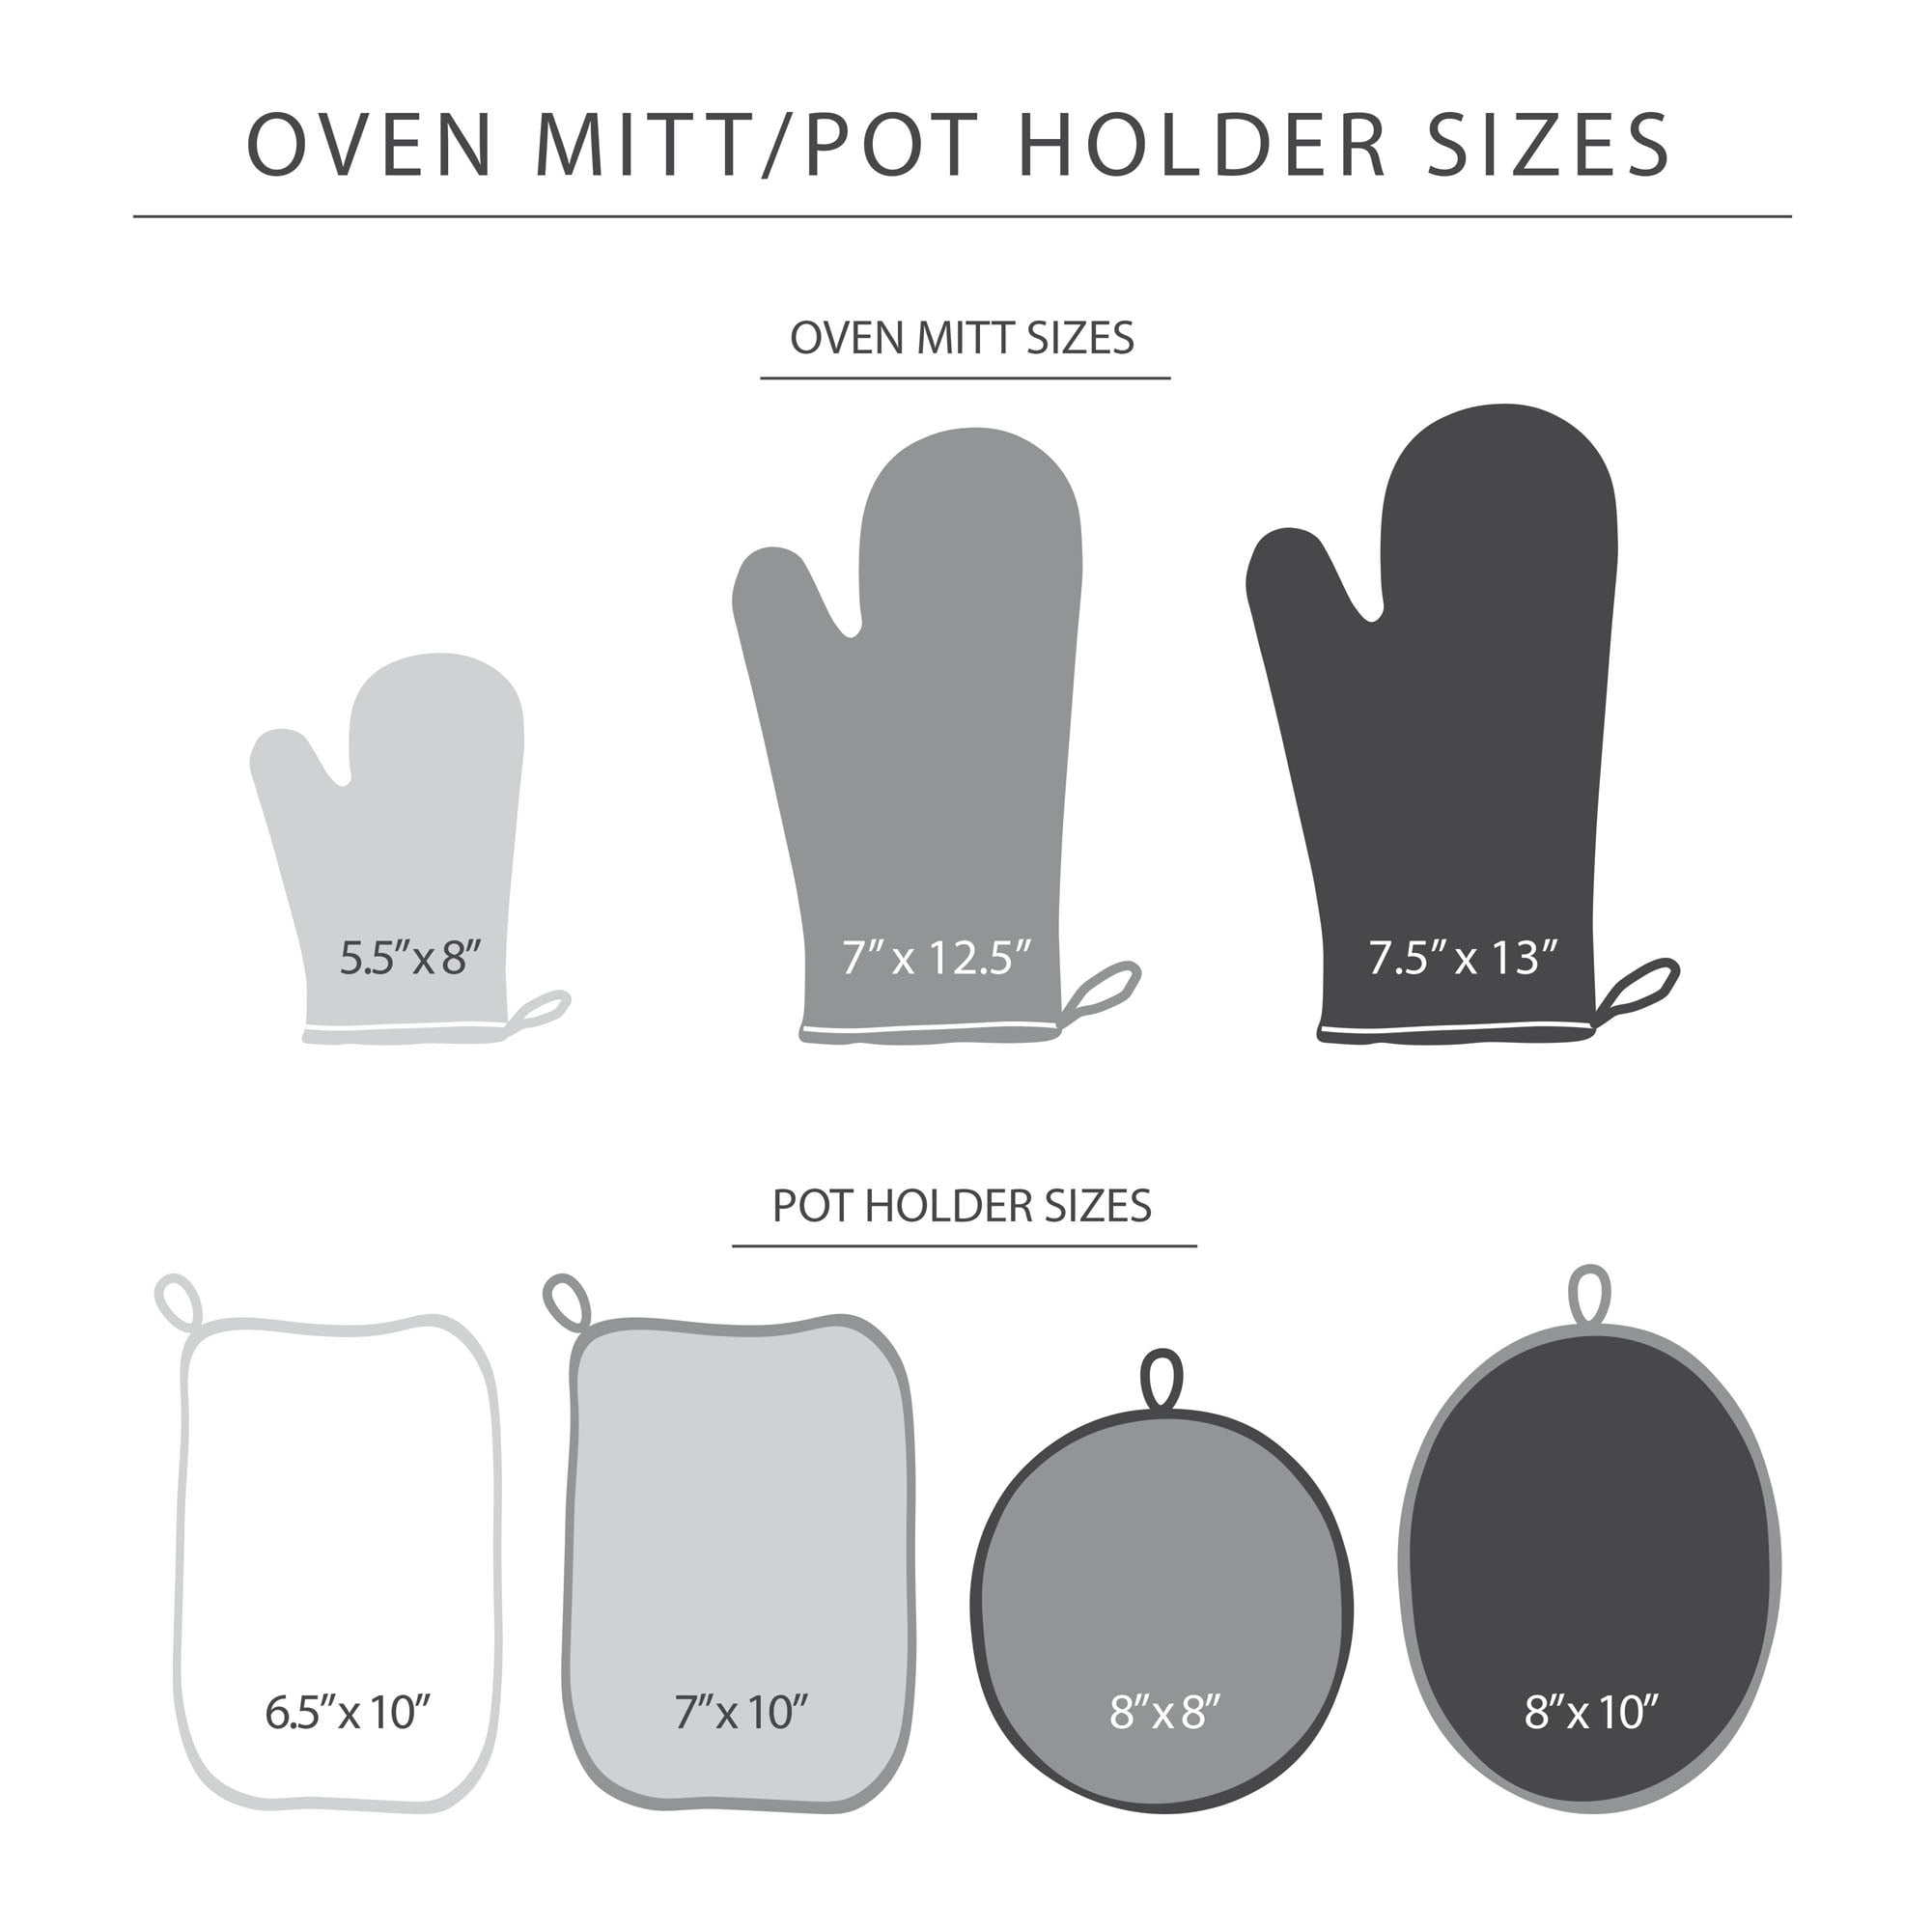 KitchenAid Asteroid Pot Holder 2-Pack Set, Charcoal Grey, 7 x 10